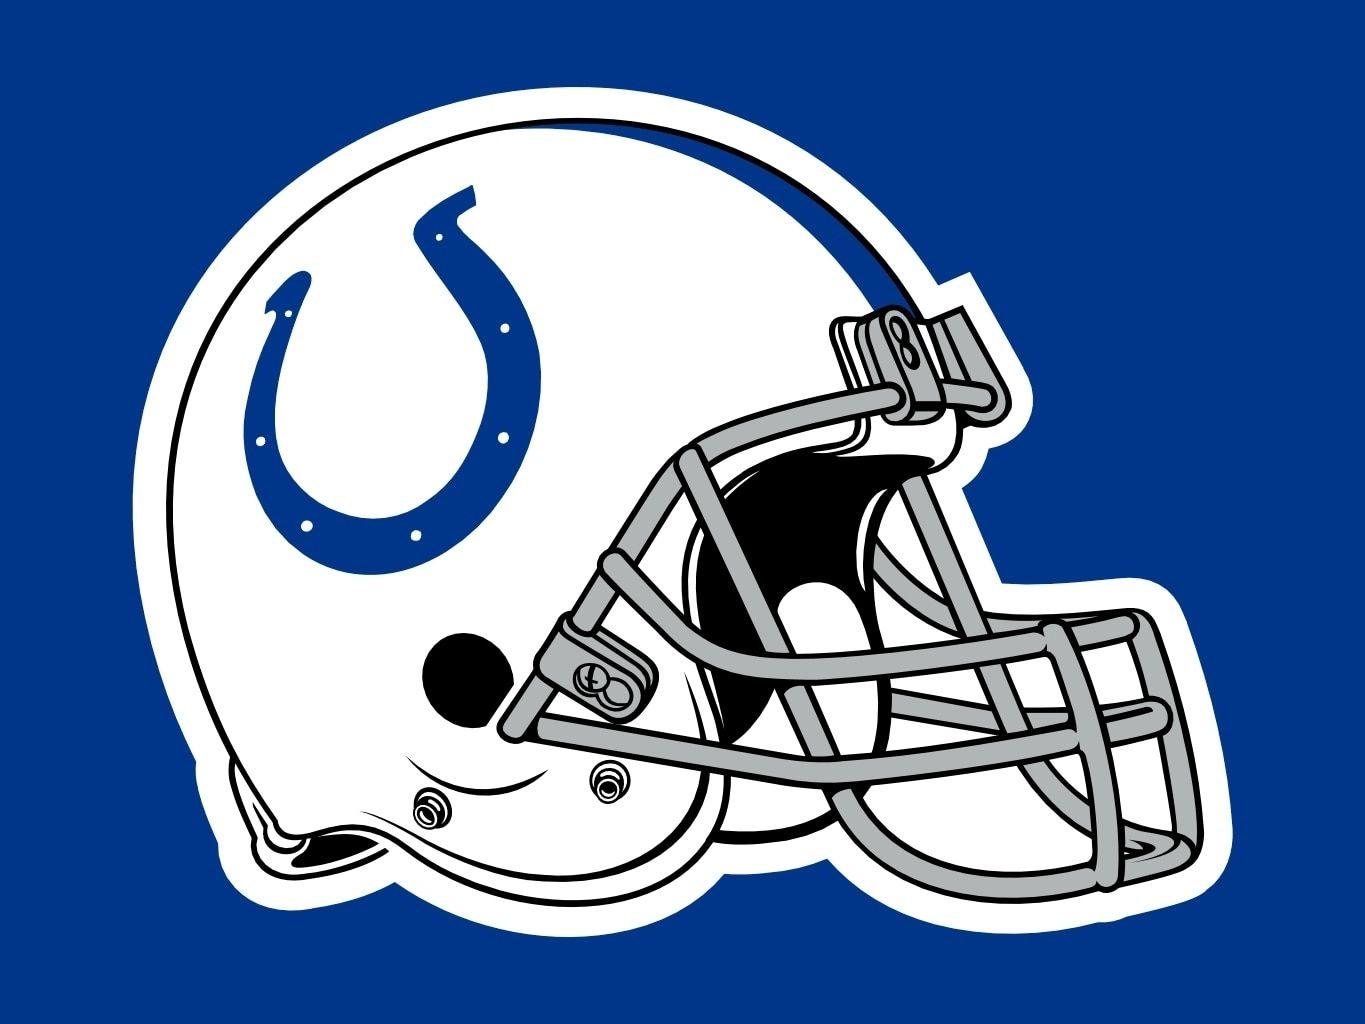 Colts Football Logo - kokoer Diamond Painting Full Square/Round Indianapolis Colts ...